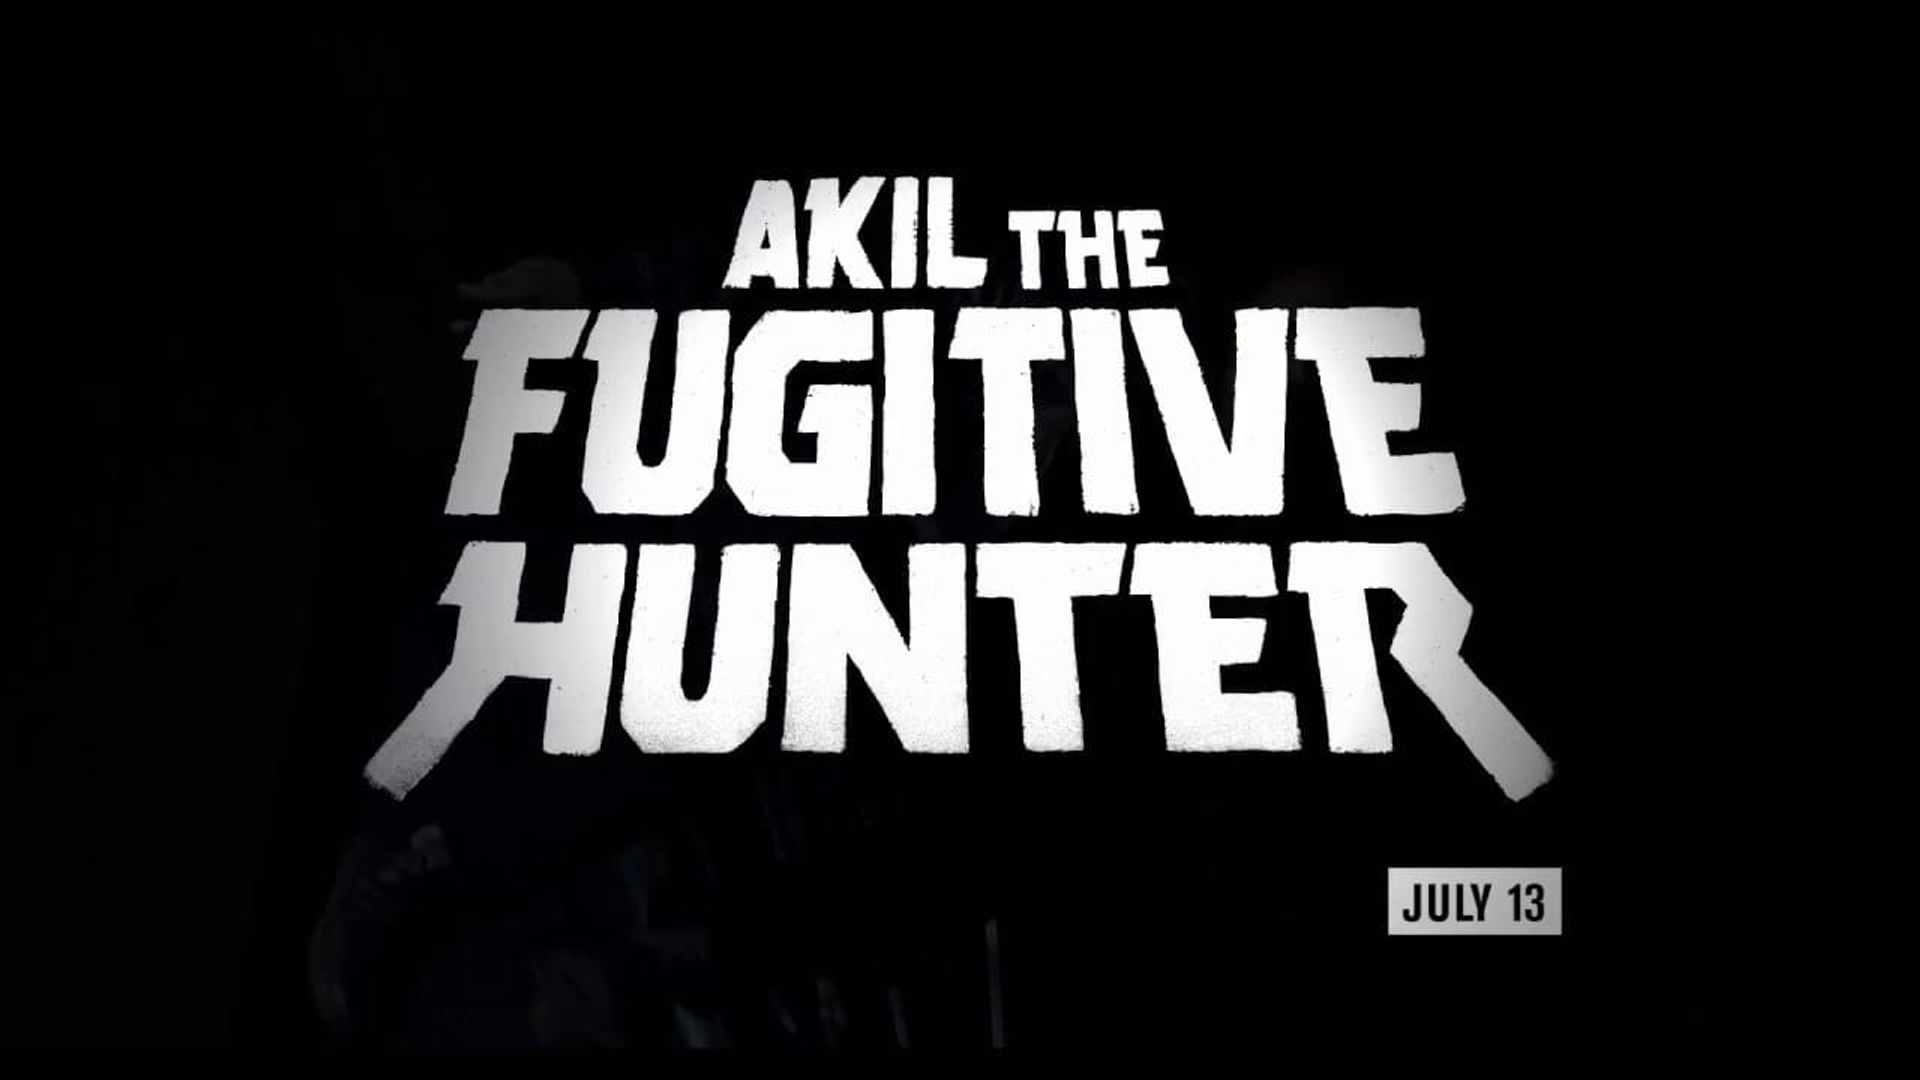 Akil the Fugitive Hunter background